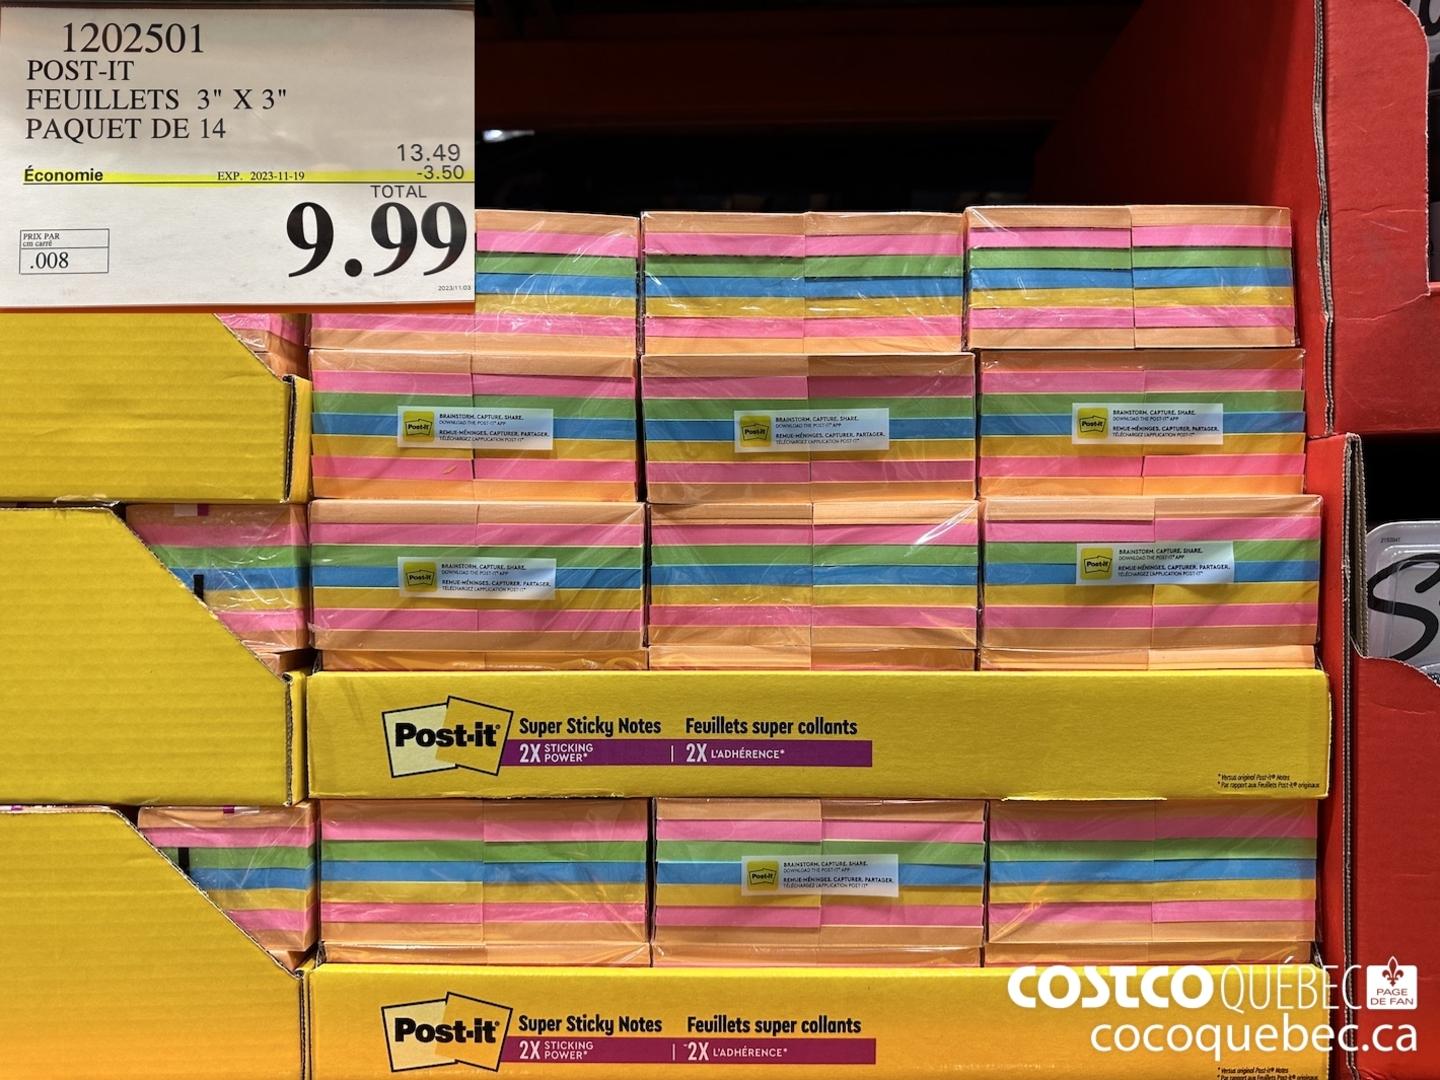 Costco sale Items & Flyer sales November 7th to 20th, 2022 – Quebec - Costco  Quebec Fan Blog